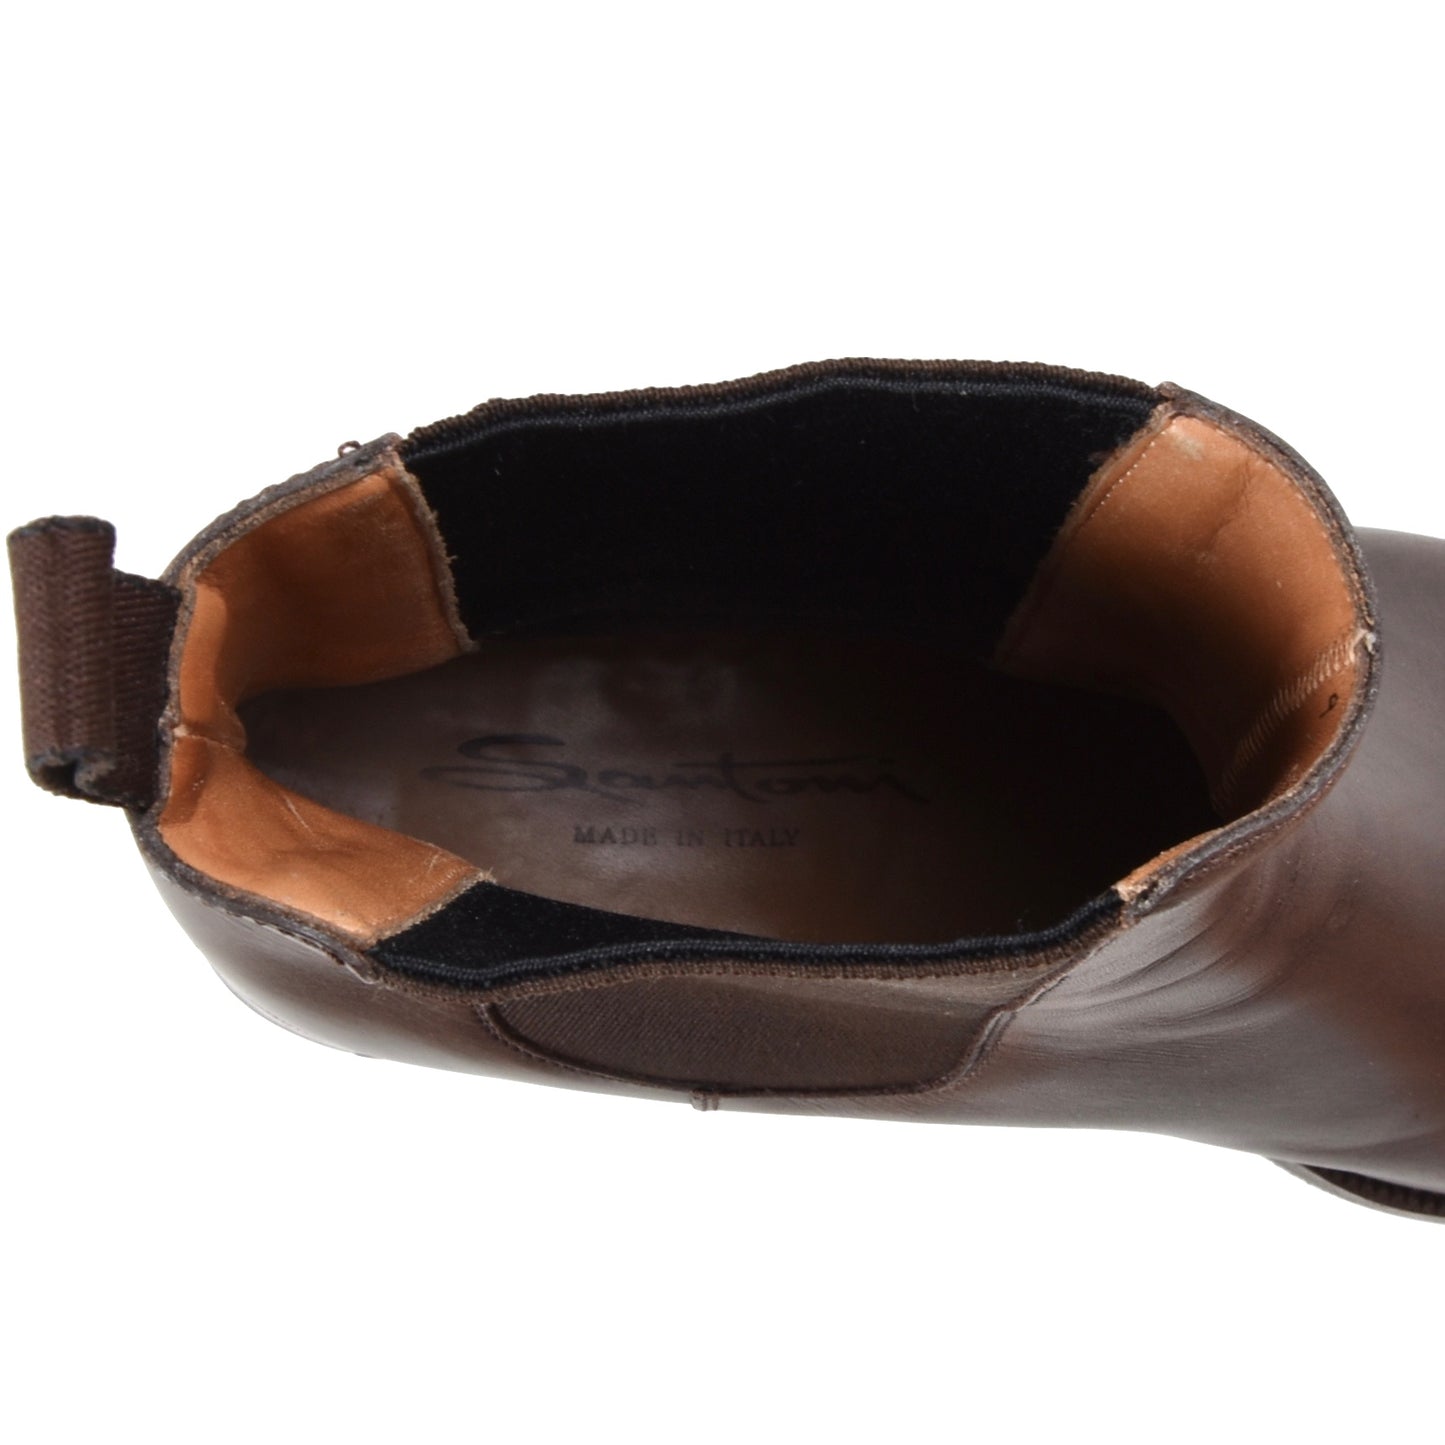 Santoni Chelsea Boots Größe 9 - Braun